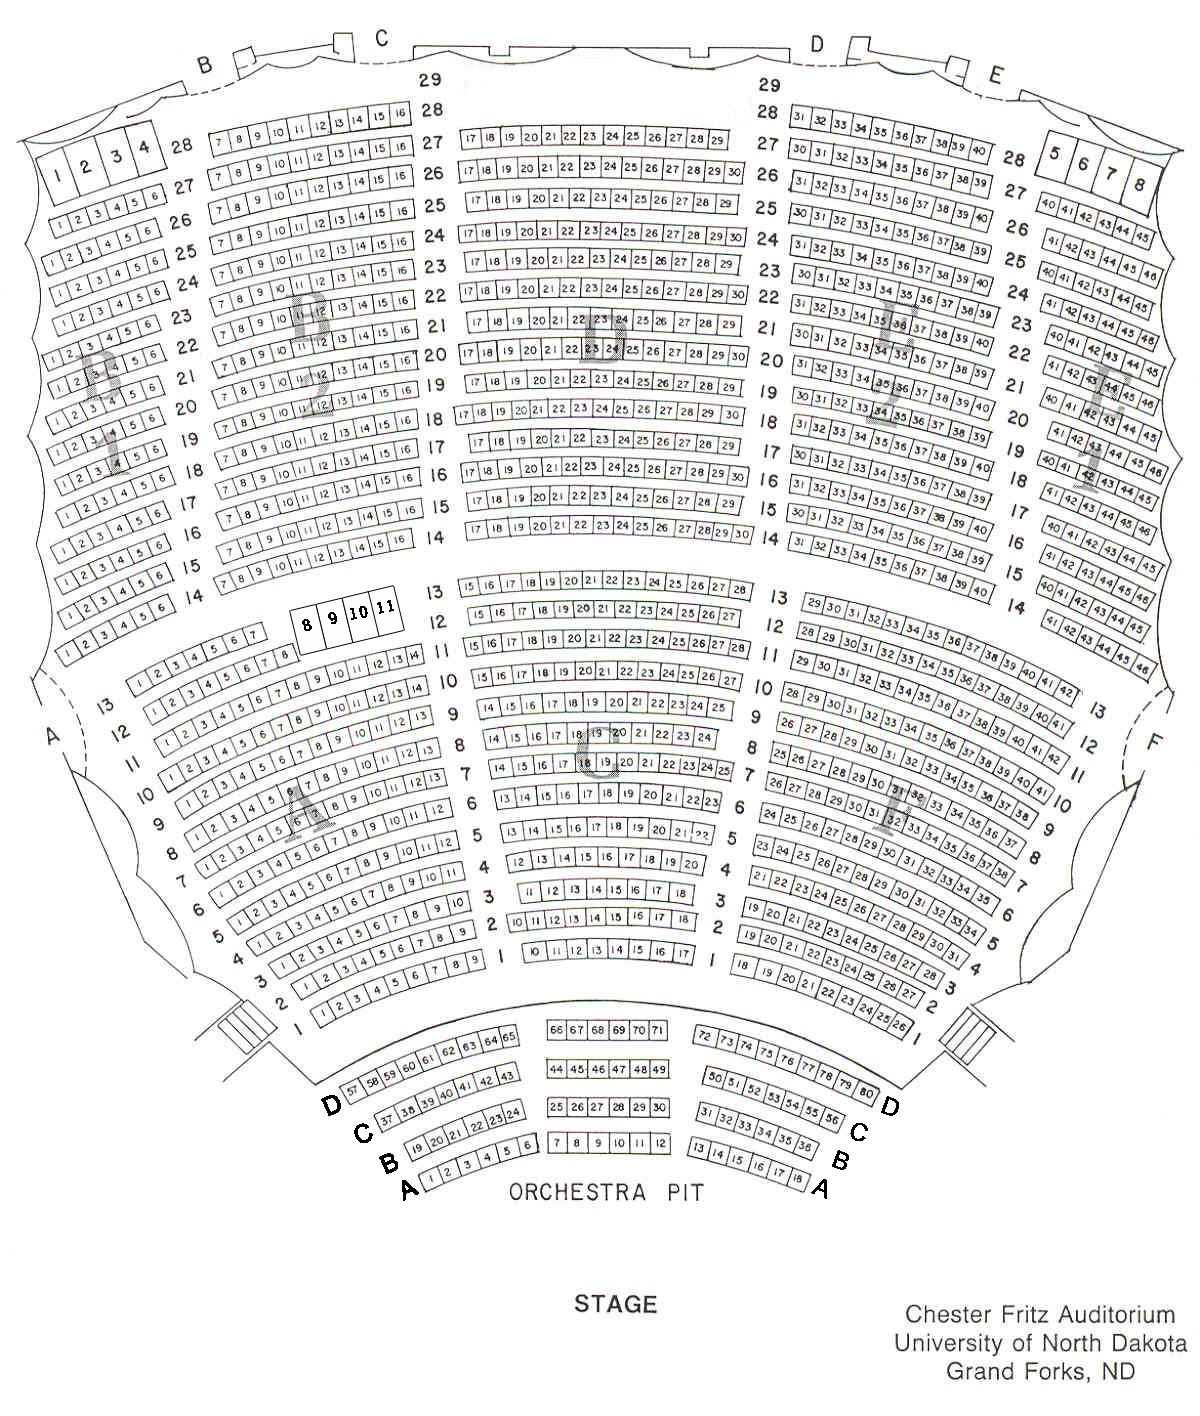 Ralph Engelstad Arena Hockey Seating Chart